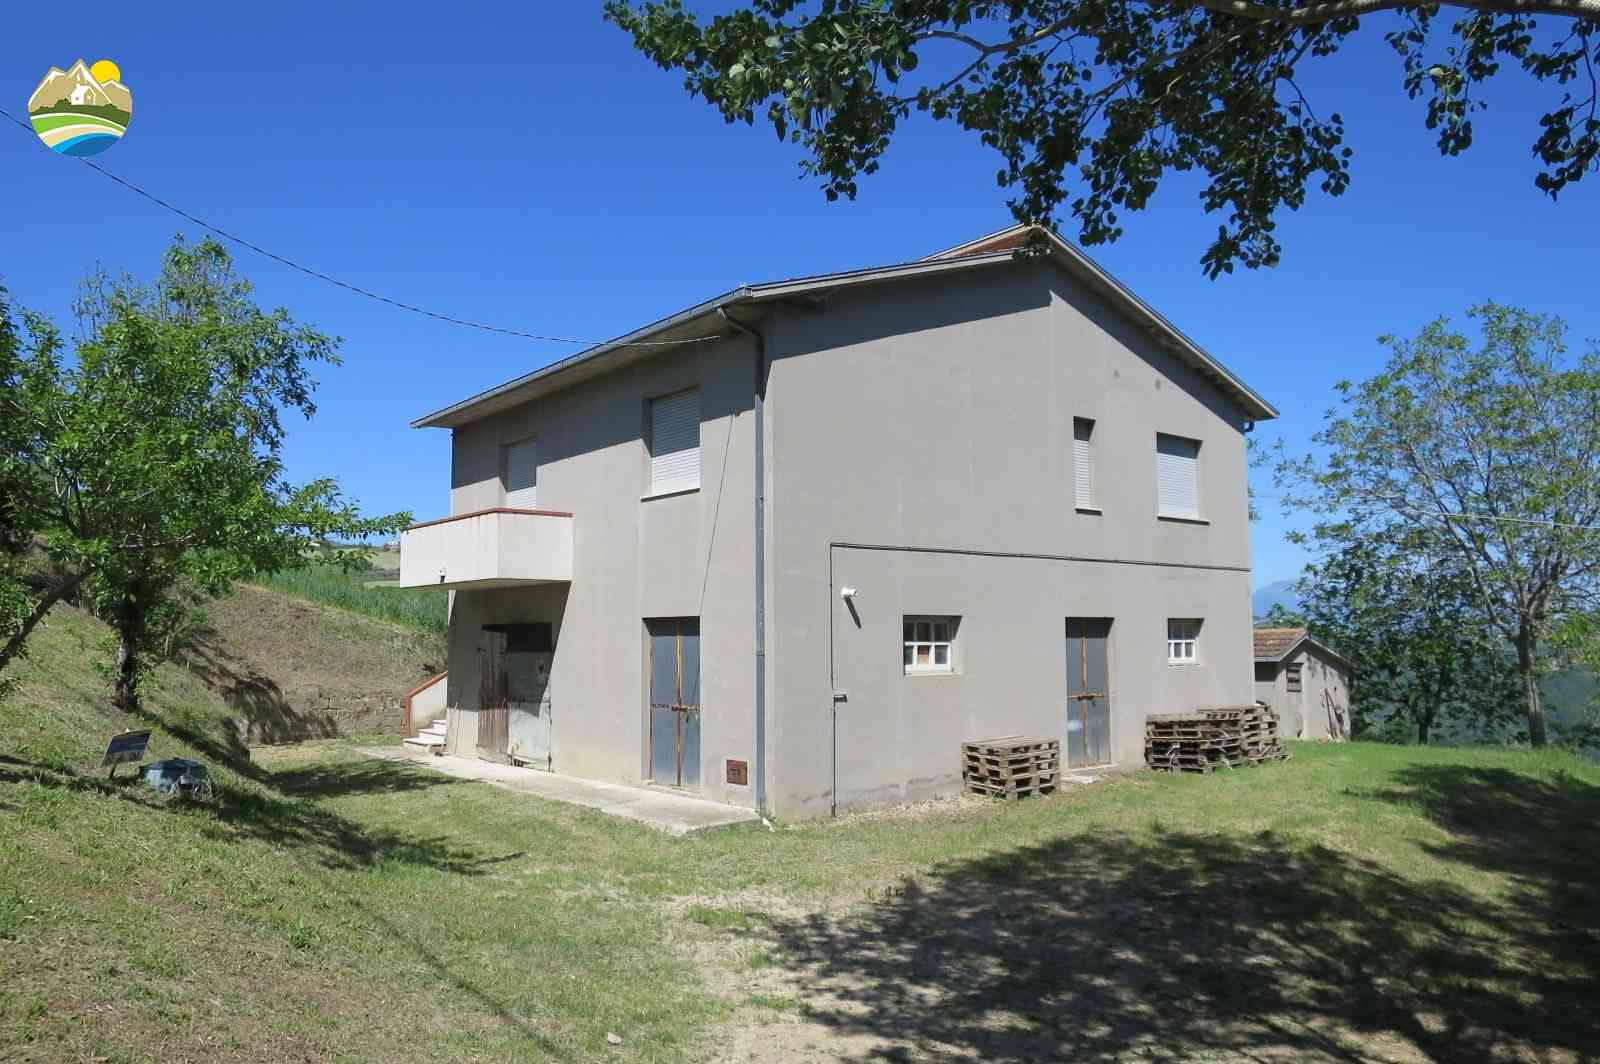 Country Houses Country Houses for sale Cellino Attanasio (TE), Casa Pioppi - Cellino Attanasio - EUR 69.713 10 small